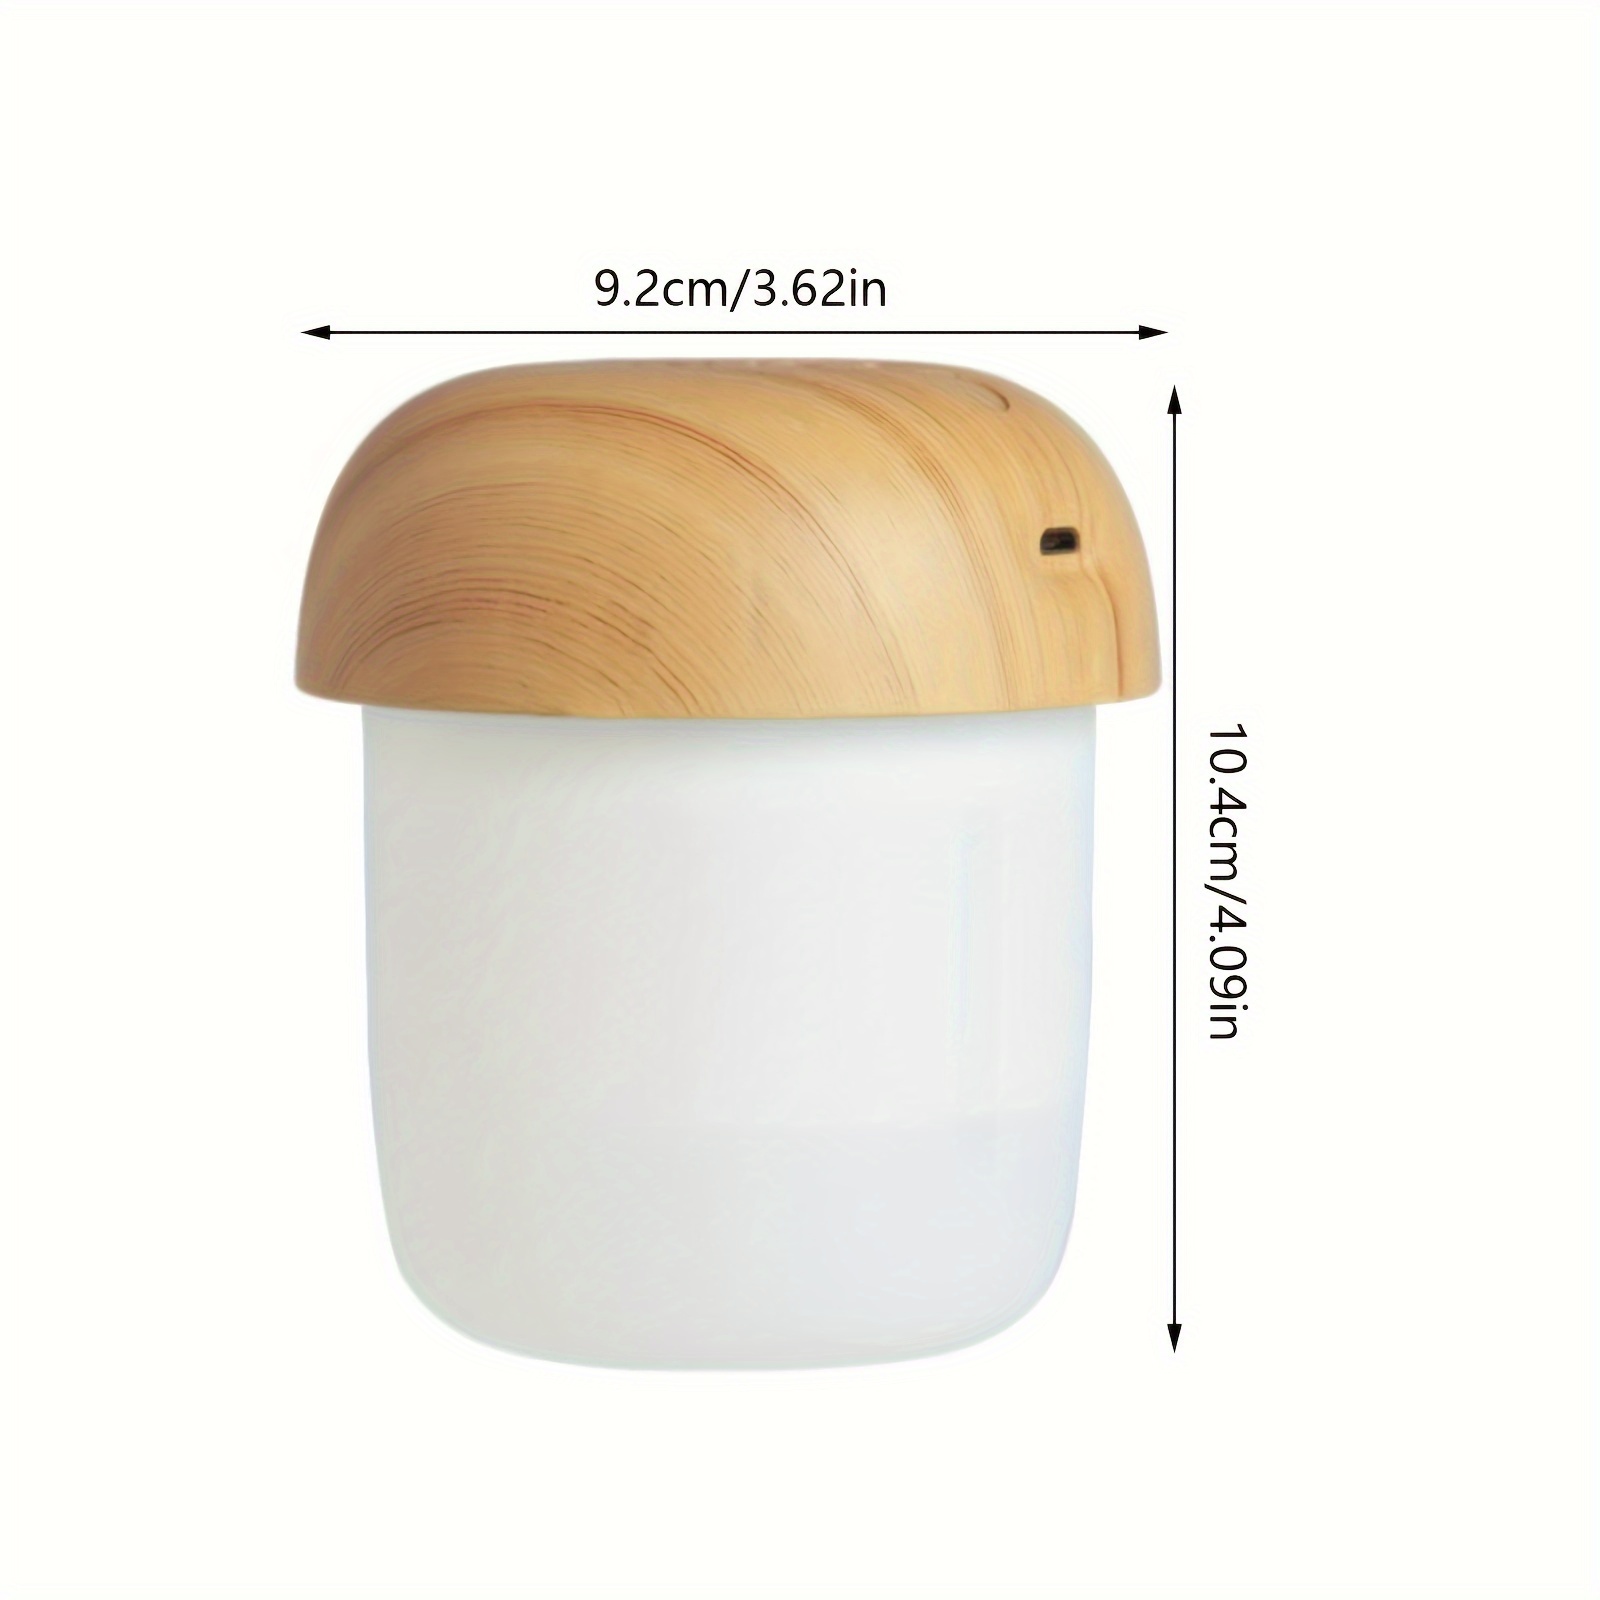 small mushroom wood grain air humidifier details 9